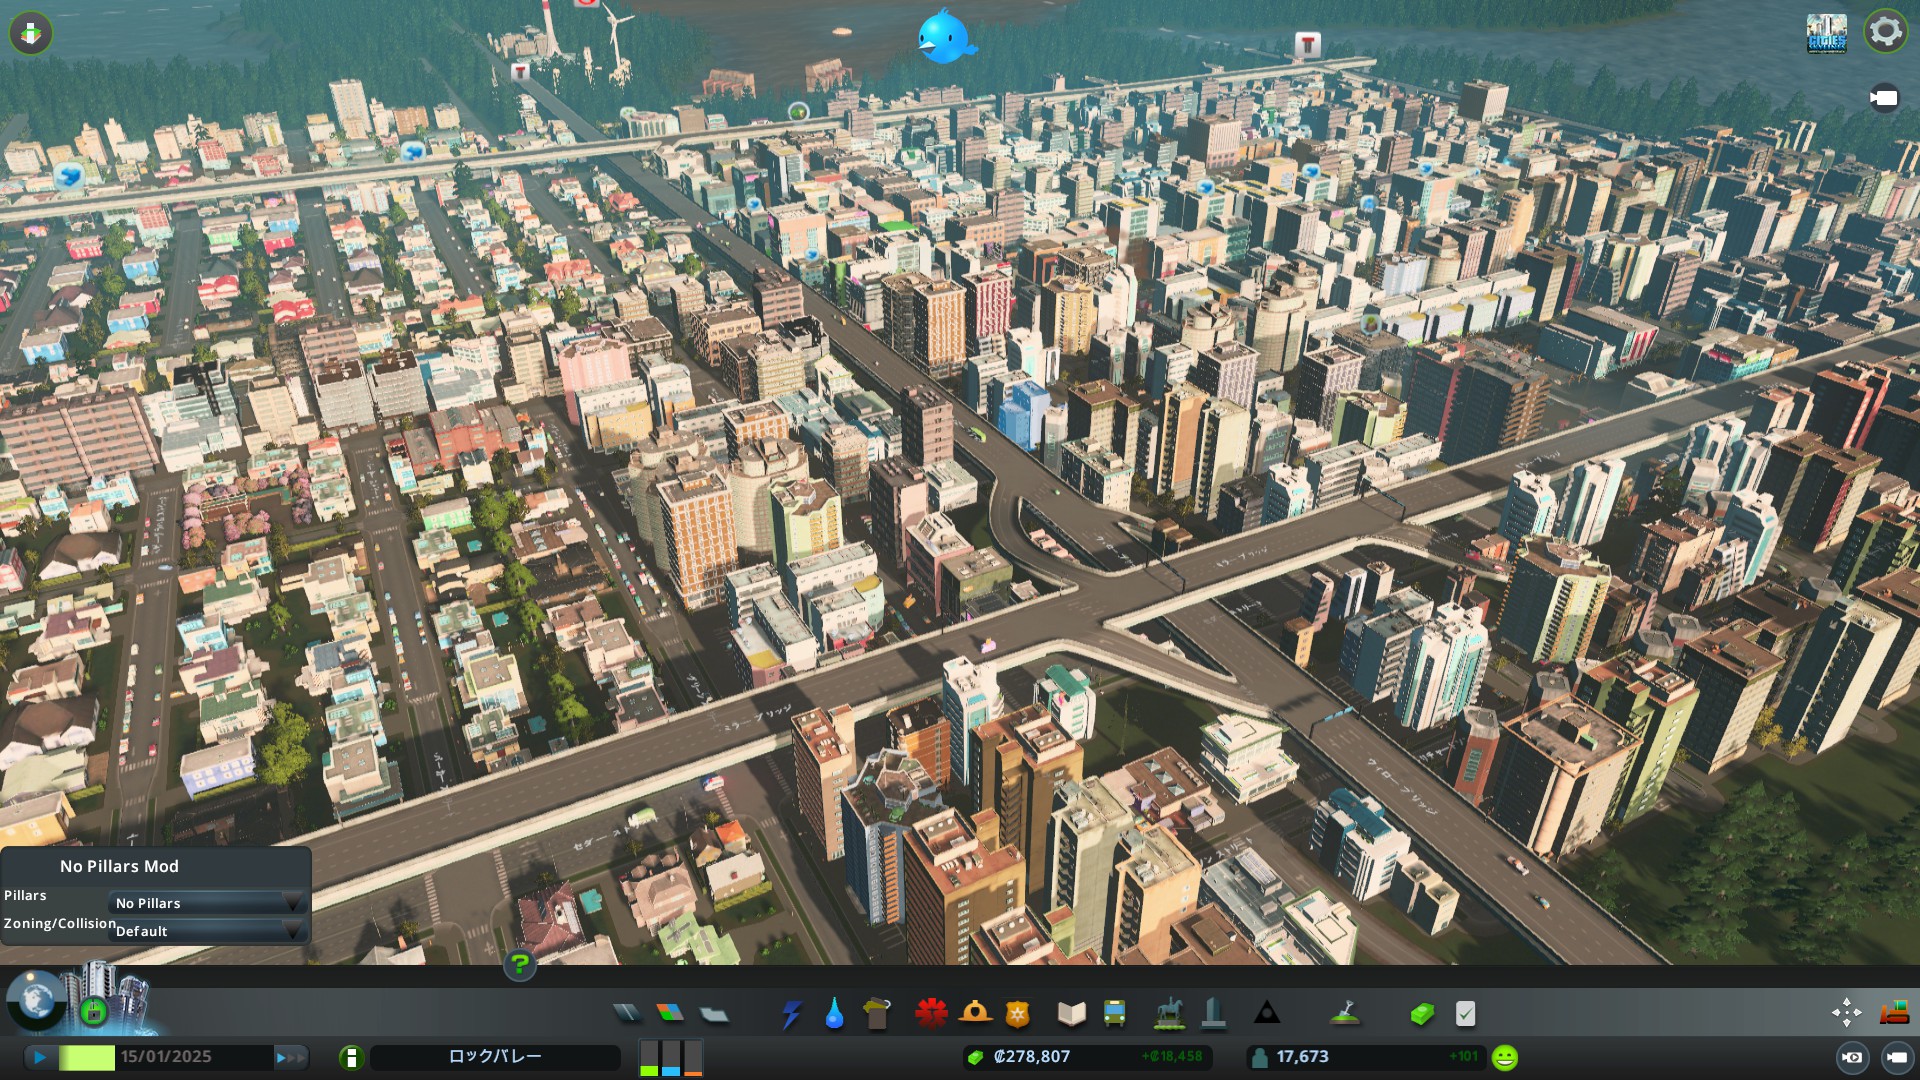 Cities Skylines 管理人おすすめのmod紹介 N S Game Blog